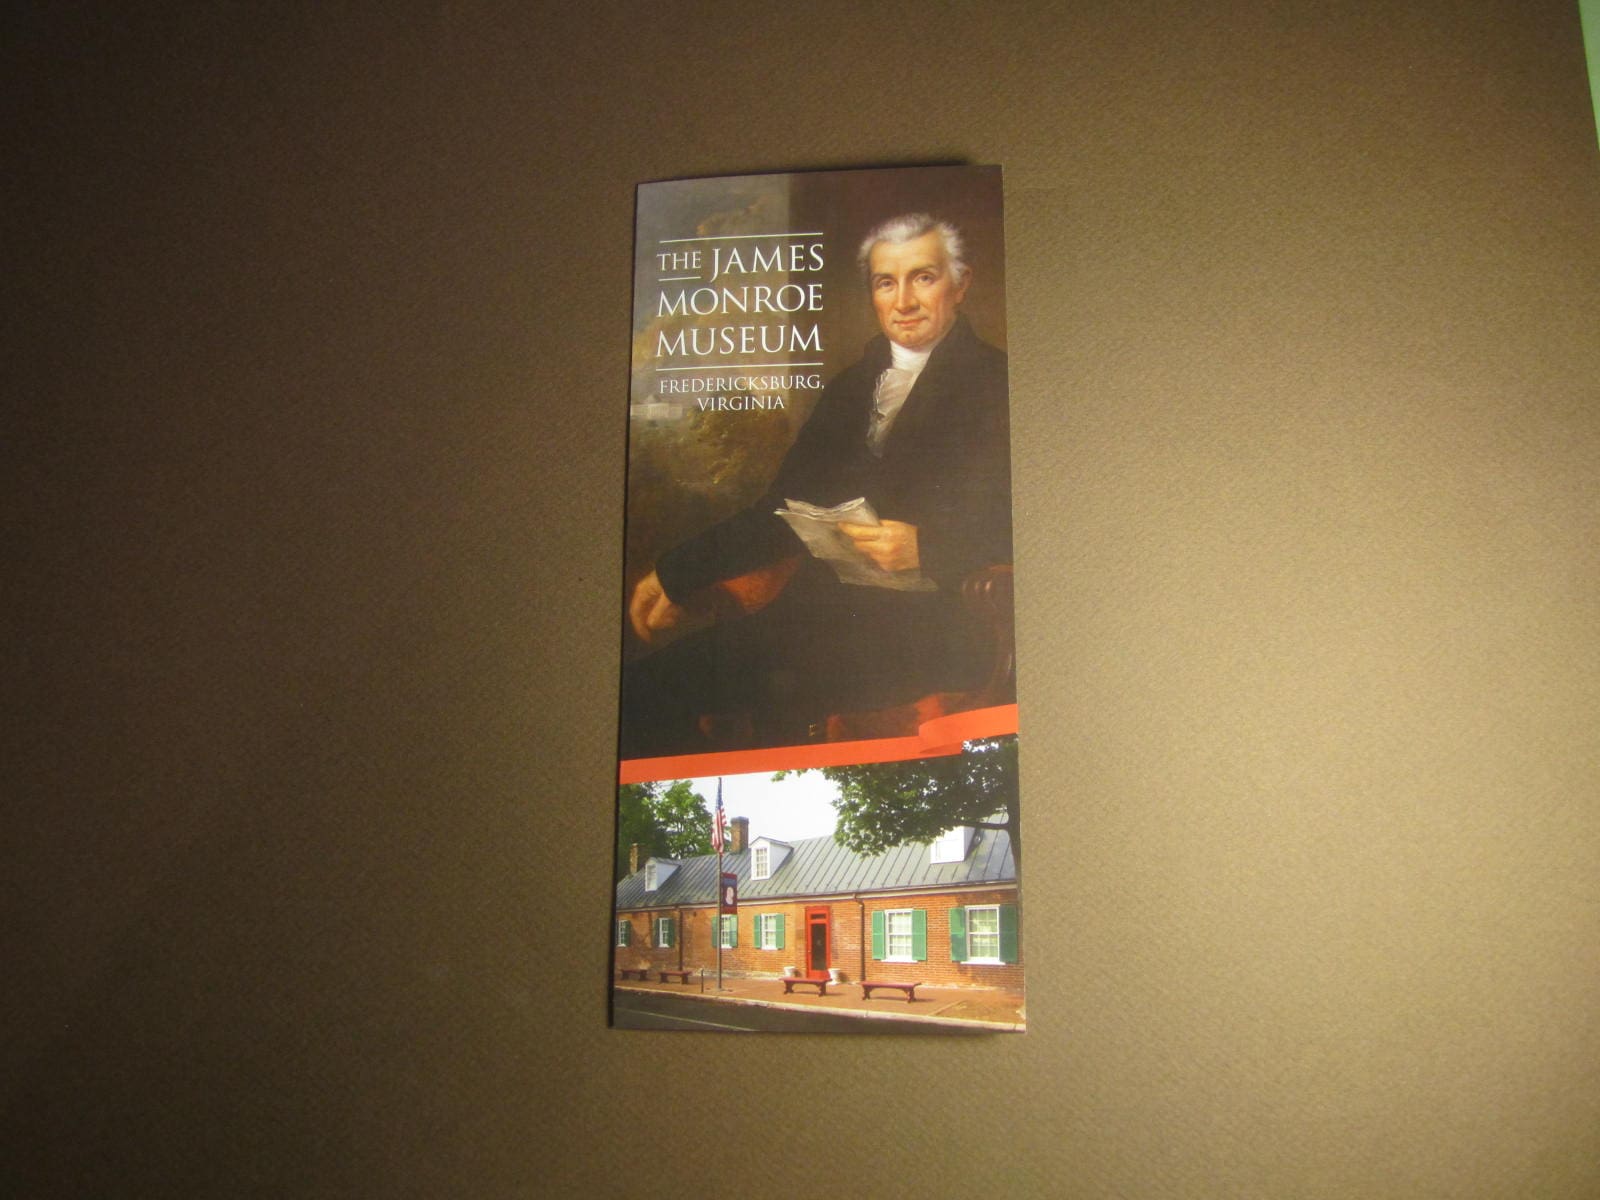 Pamphlet from the James Monroe Museum in Fredericksburg, Virginia